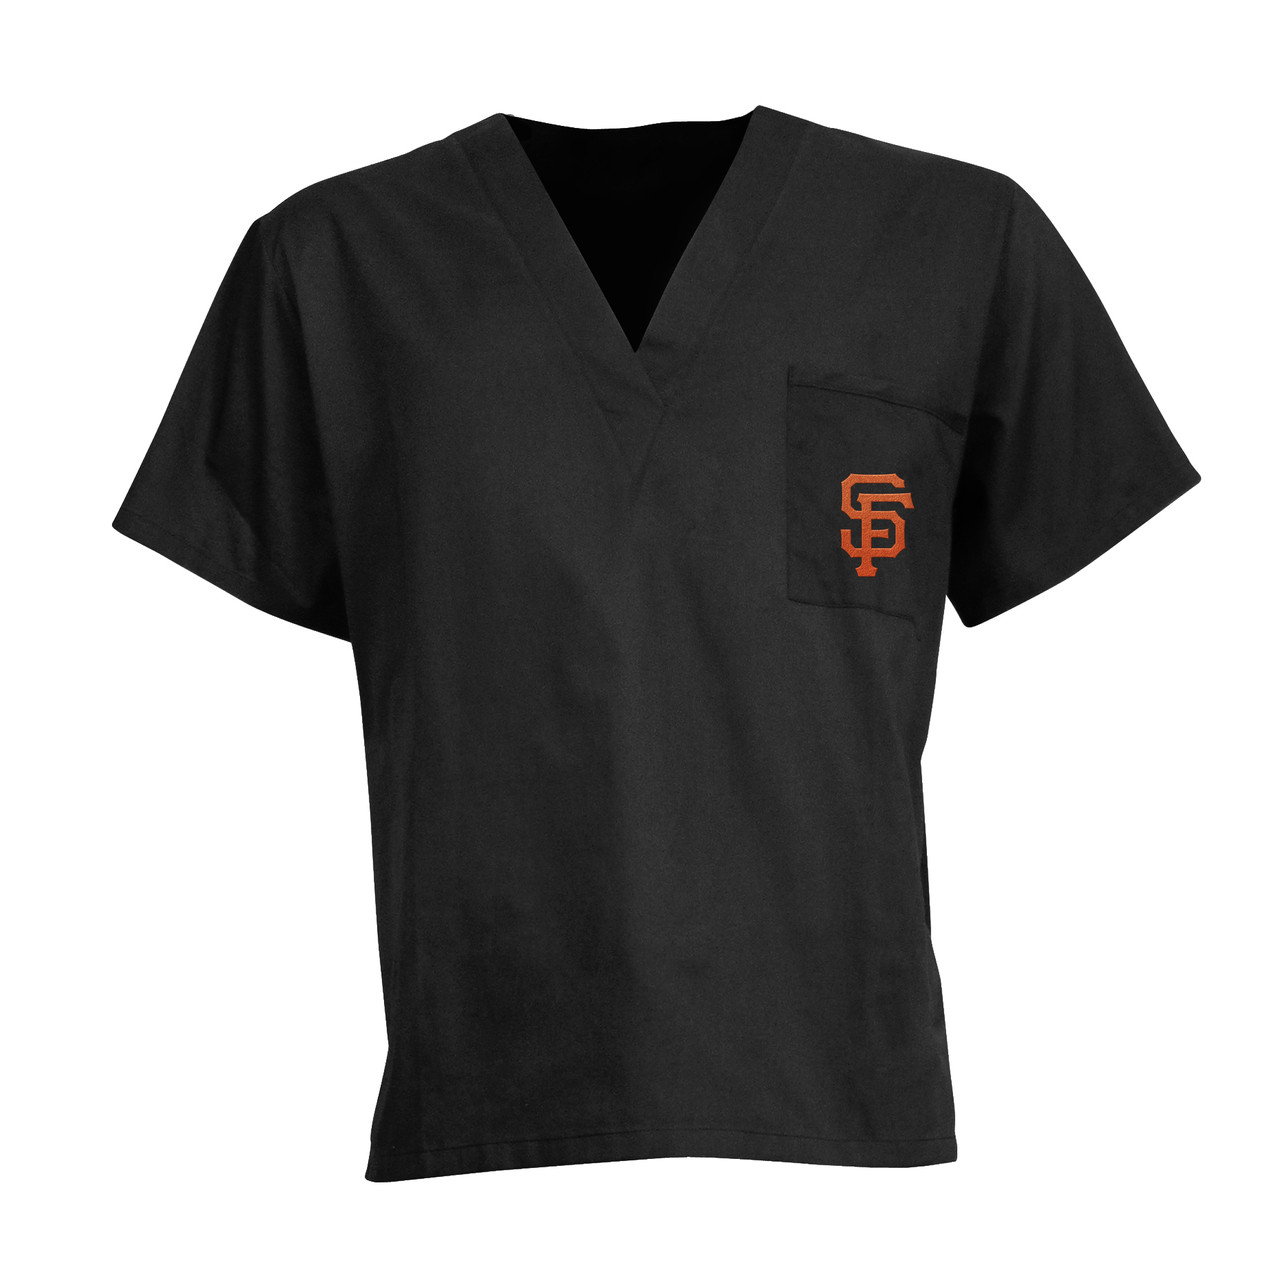 San Francisco Giants™ Uniform 3 pc.